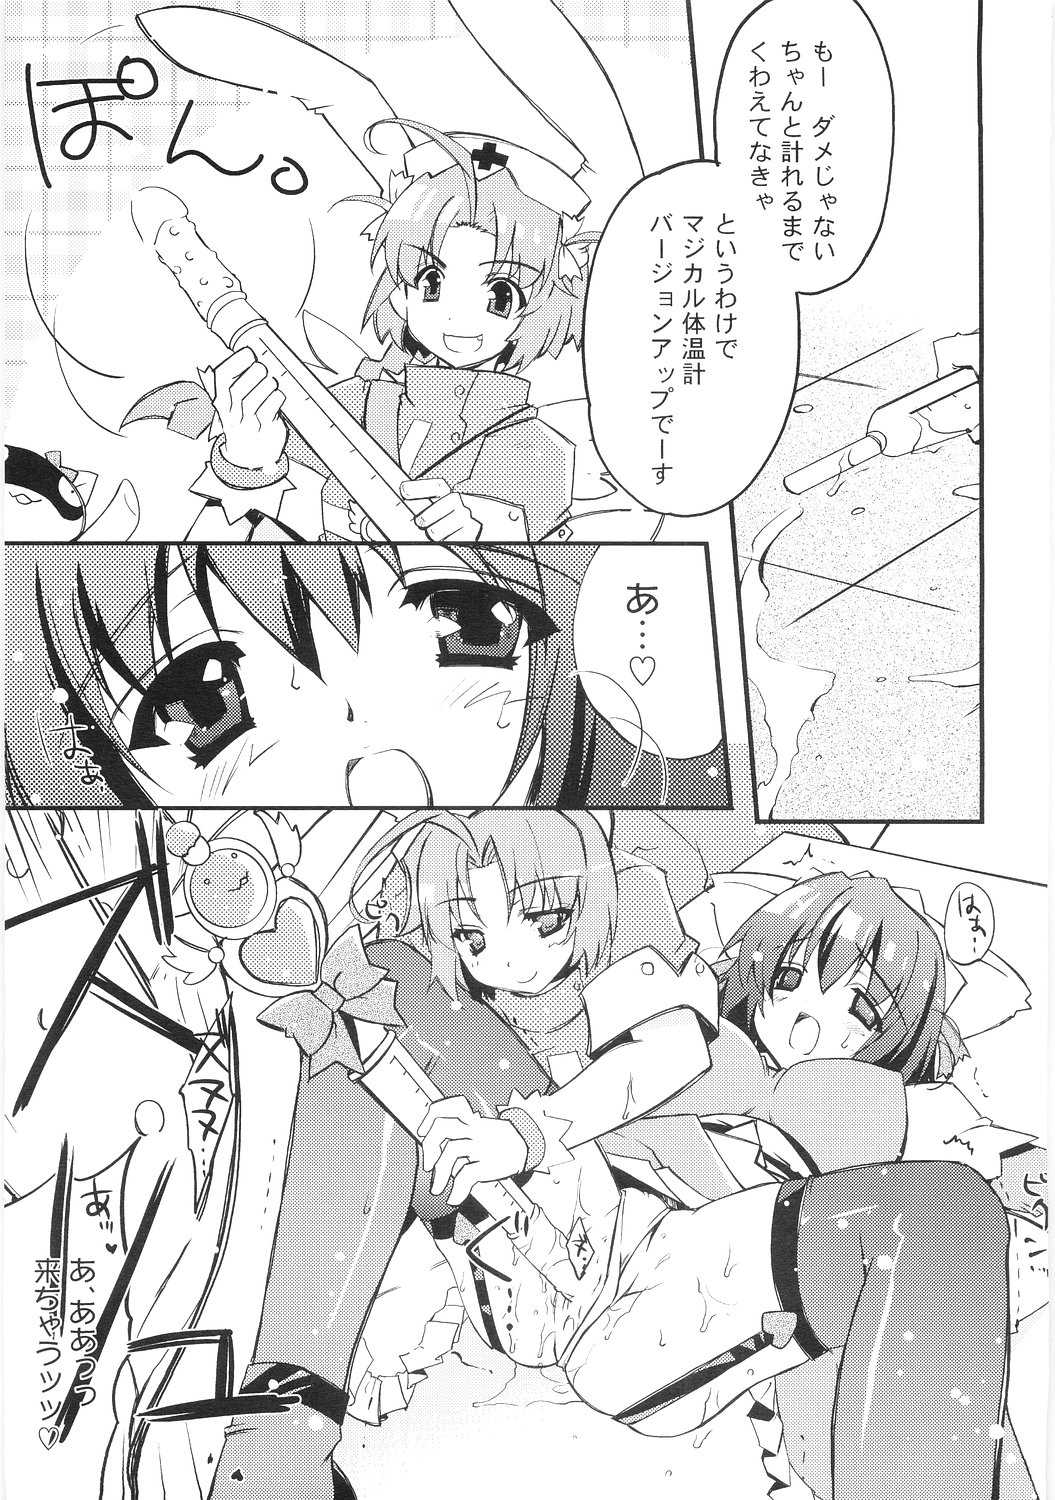 (C68) [Przm Star (QuanXing)] Flower Flour (Nurse Witch Komugi-chan Magi Karte) (C68) [Przm Star (光星)] Flower Flour (ナースウィッチ小麦ちゃんマジカルて)